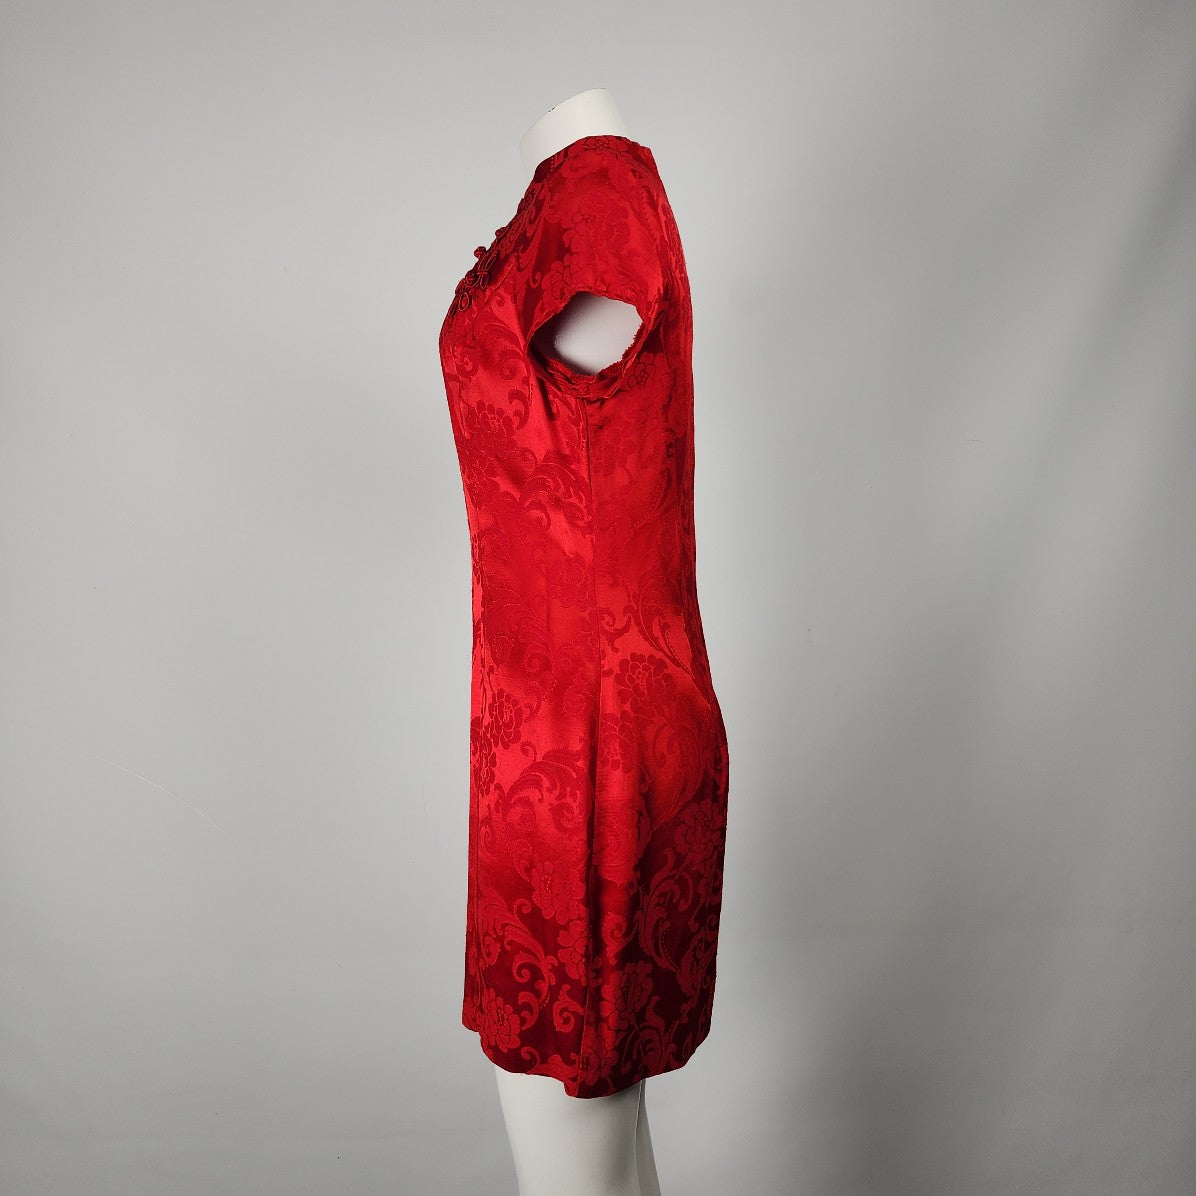 Vintage Roberta Red Cheongsam Dress Size S